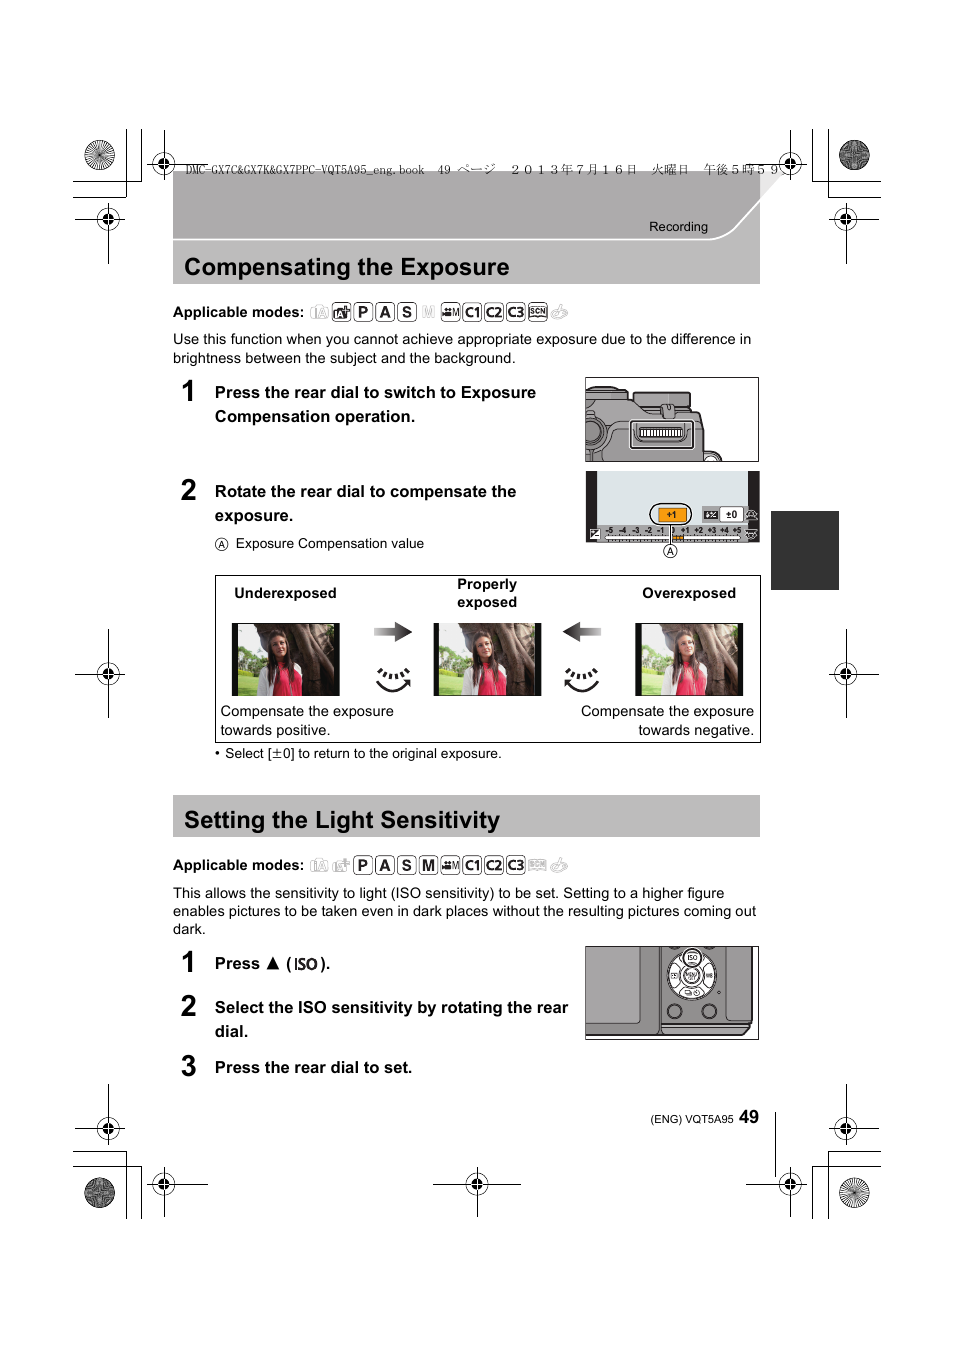 Compensating the exposure, Setting the light sensitivity | Panasonic DMC-GX7SBODY User Manual | Page 49 / 104